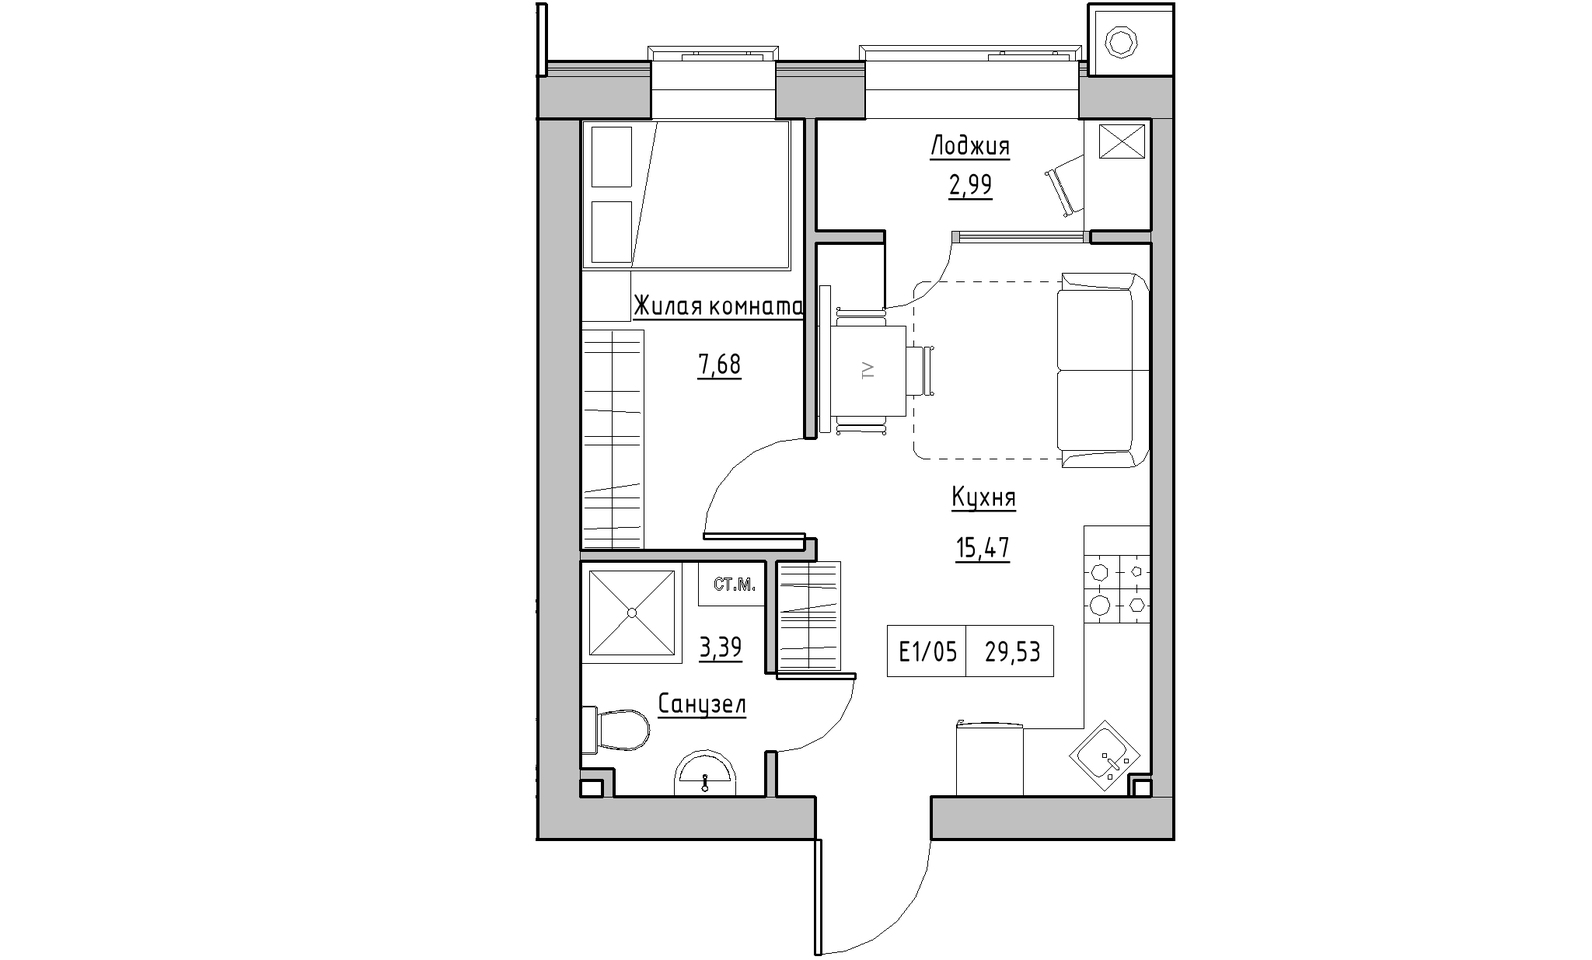 Planning 1-rm flats area 29.53m2, KS-014-04/0006.